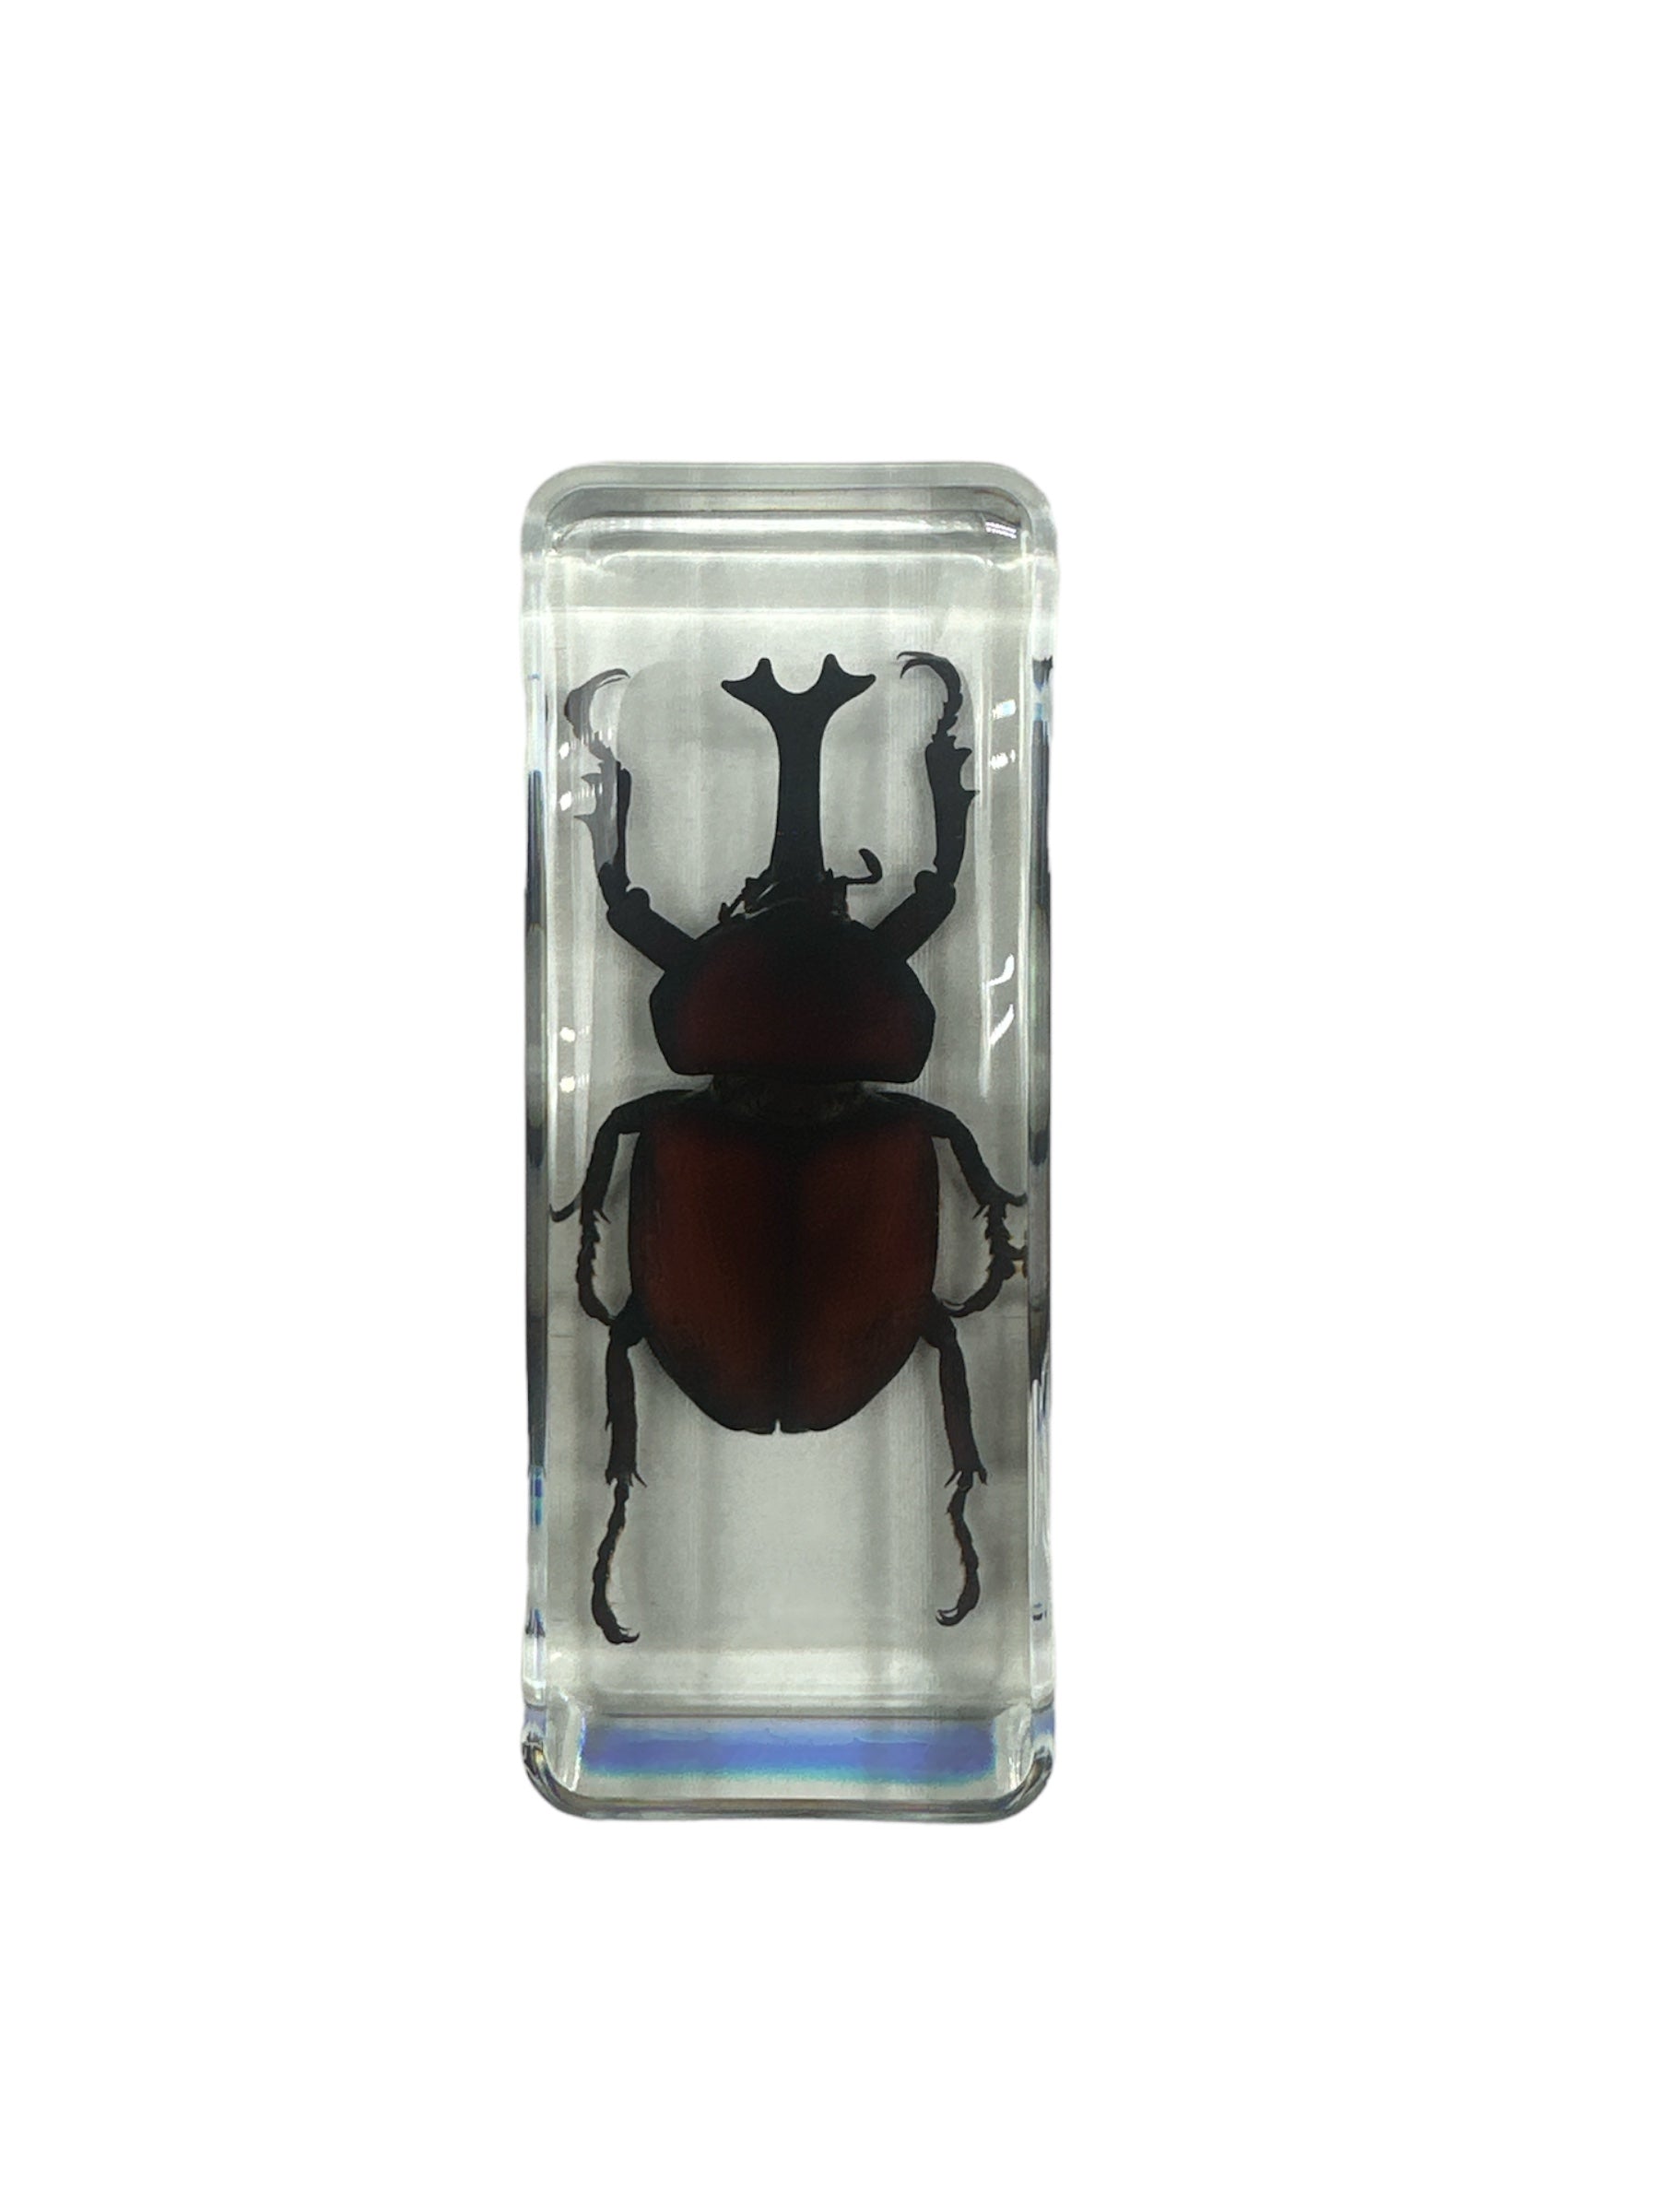 Giant Unicorn Beetle - Specimen In Resin